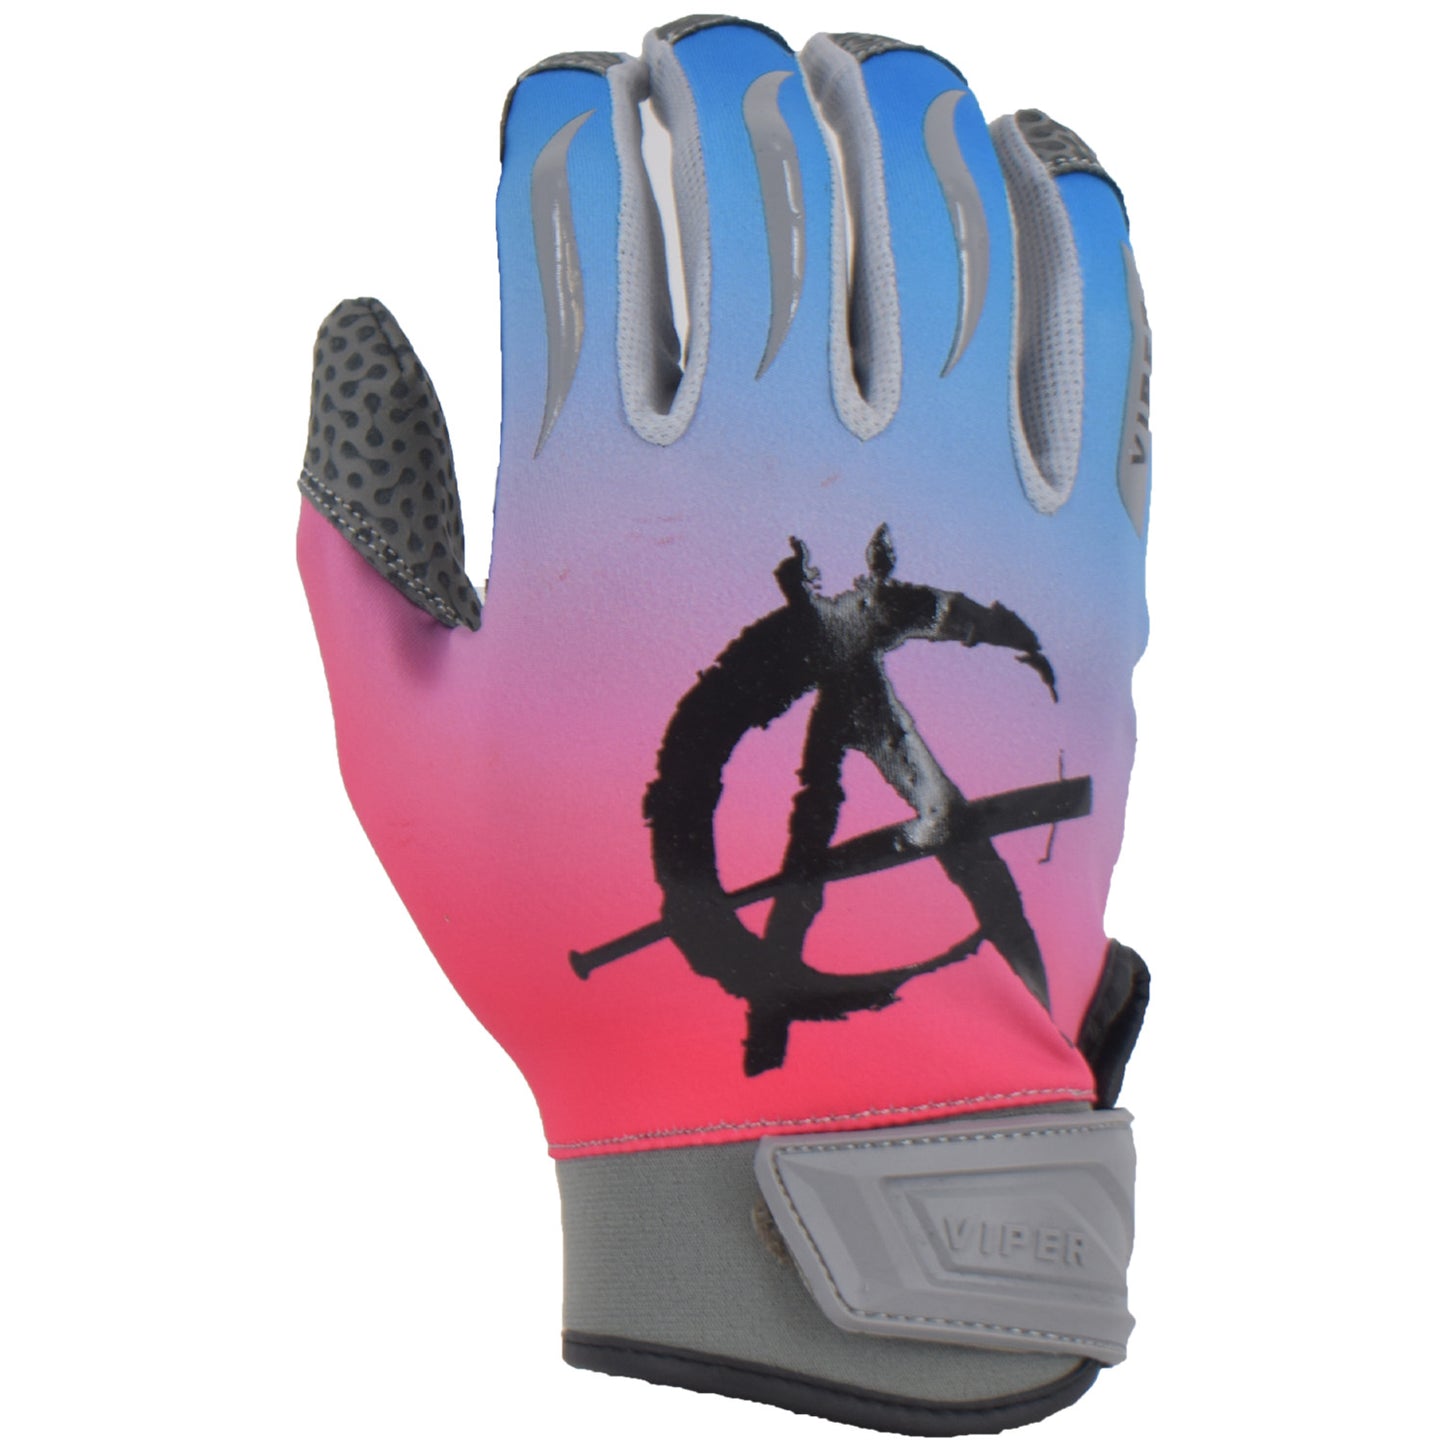 Viper Lite Premium Batting Gloves Leather Palm - Anarchy Edition Pink/Carolina Fade